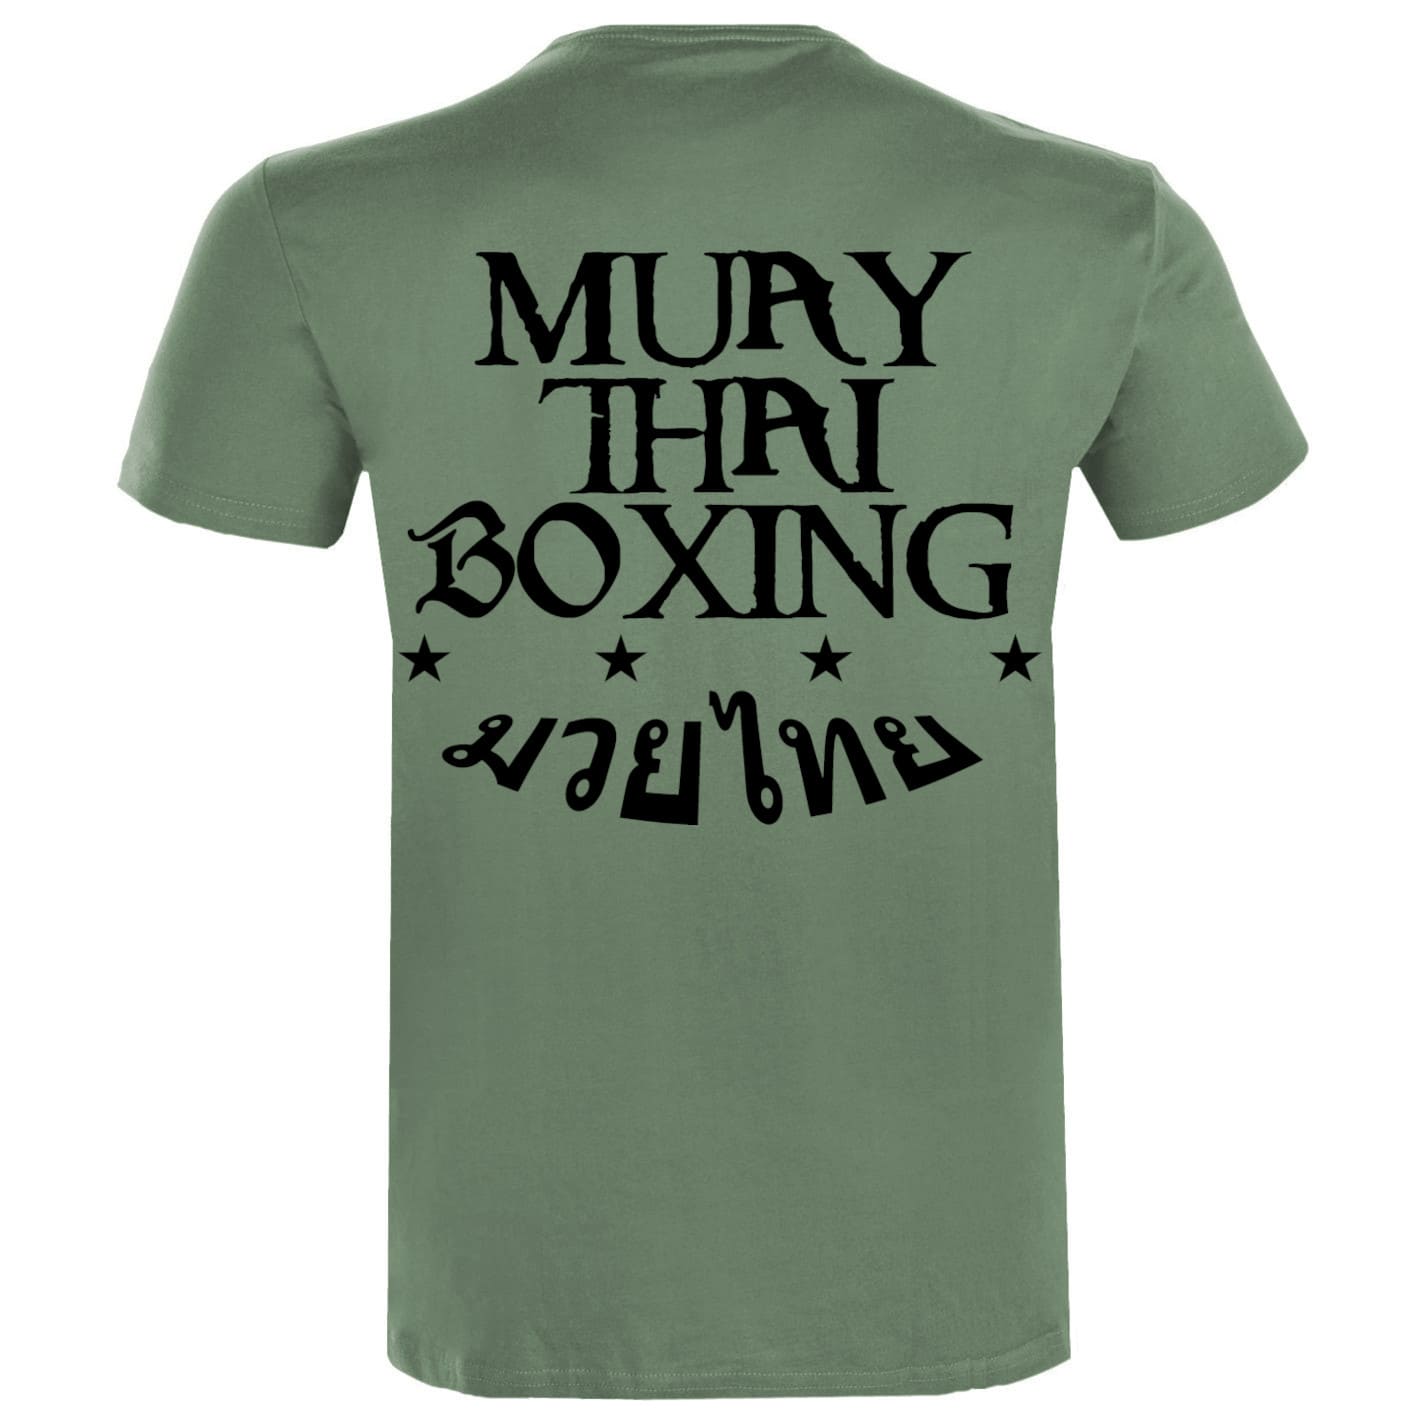 Dynamix Athletics T-Shirt Muay Thai Boxing - Military